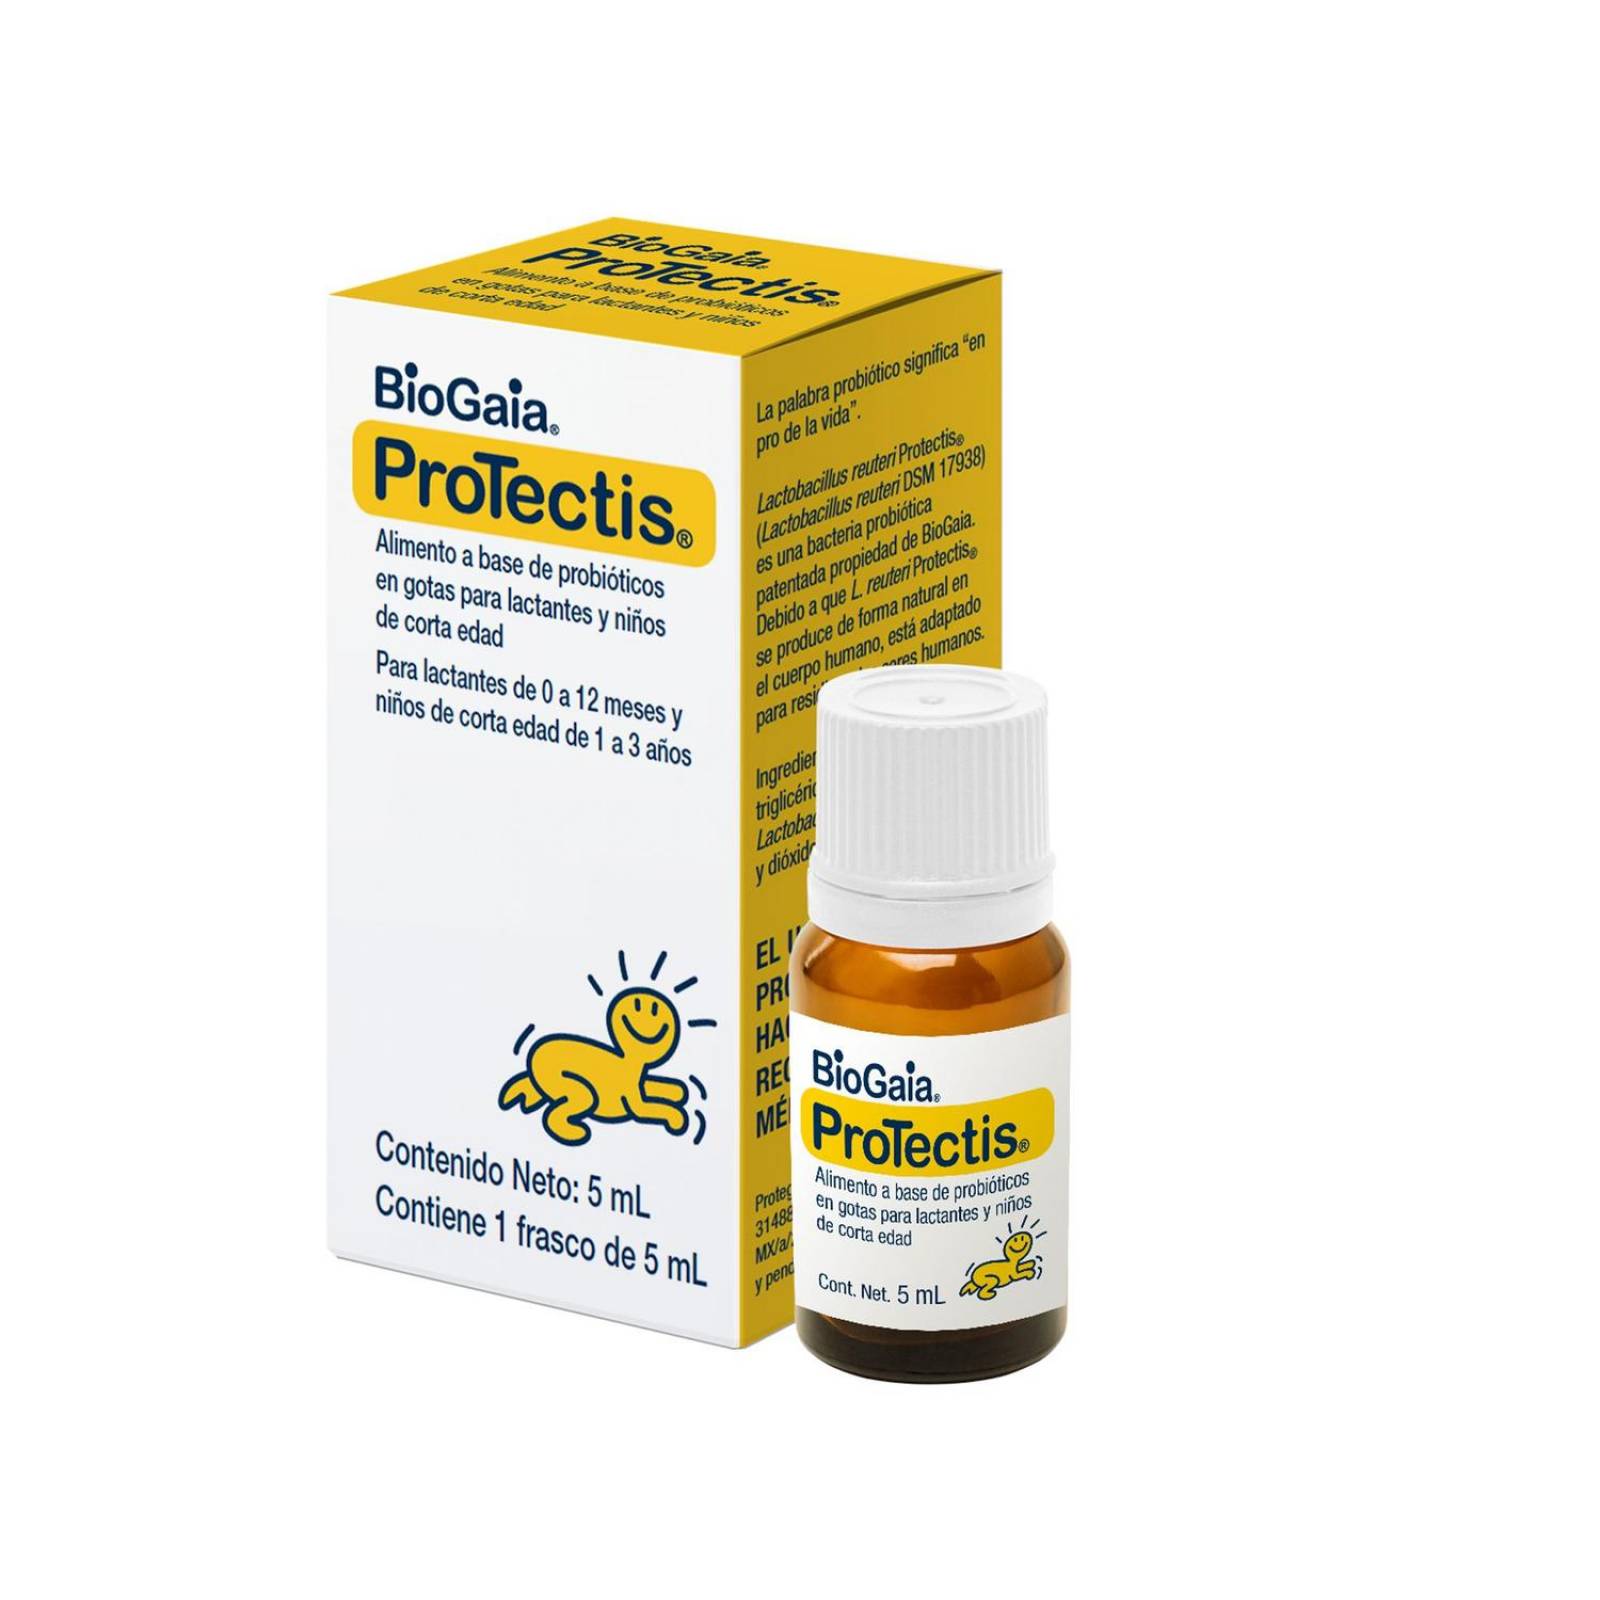 Alimento Infantil BioGaia ProTectis en Gotas para Lactantes y Niños, 10 ml.